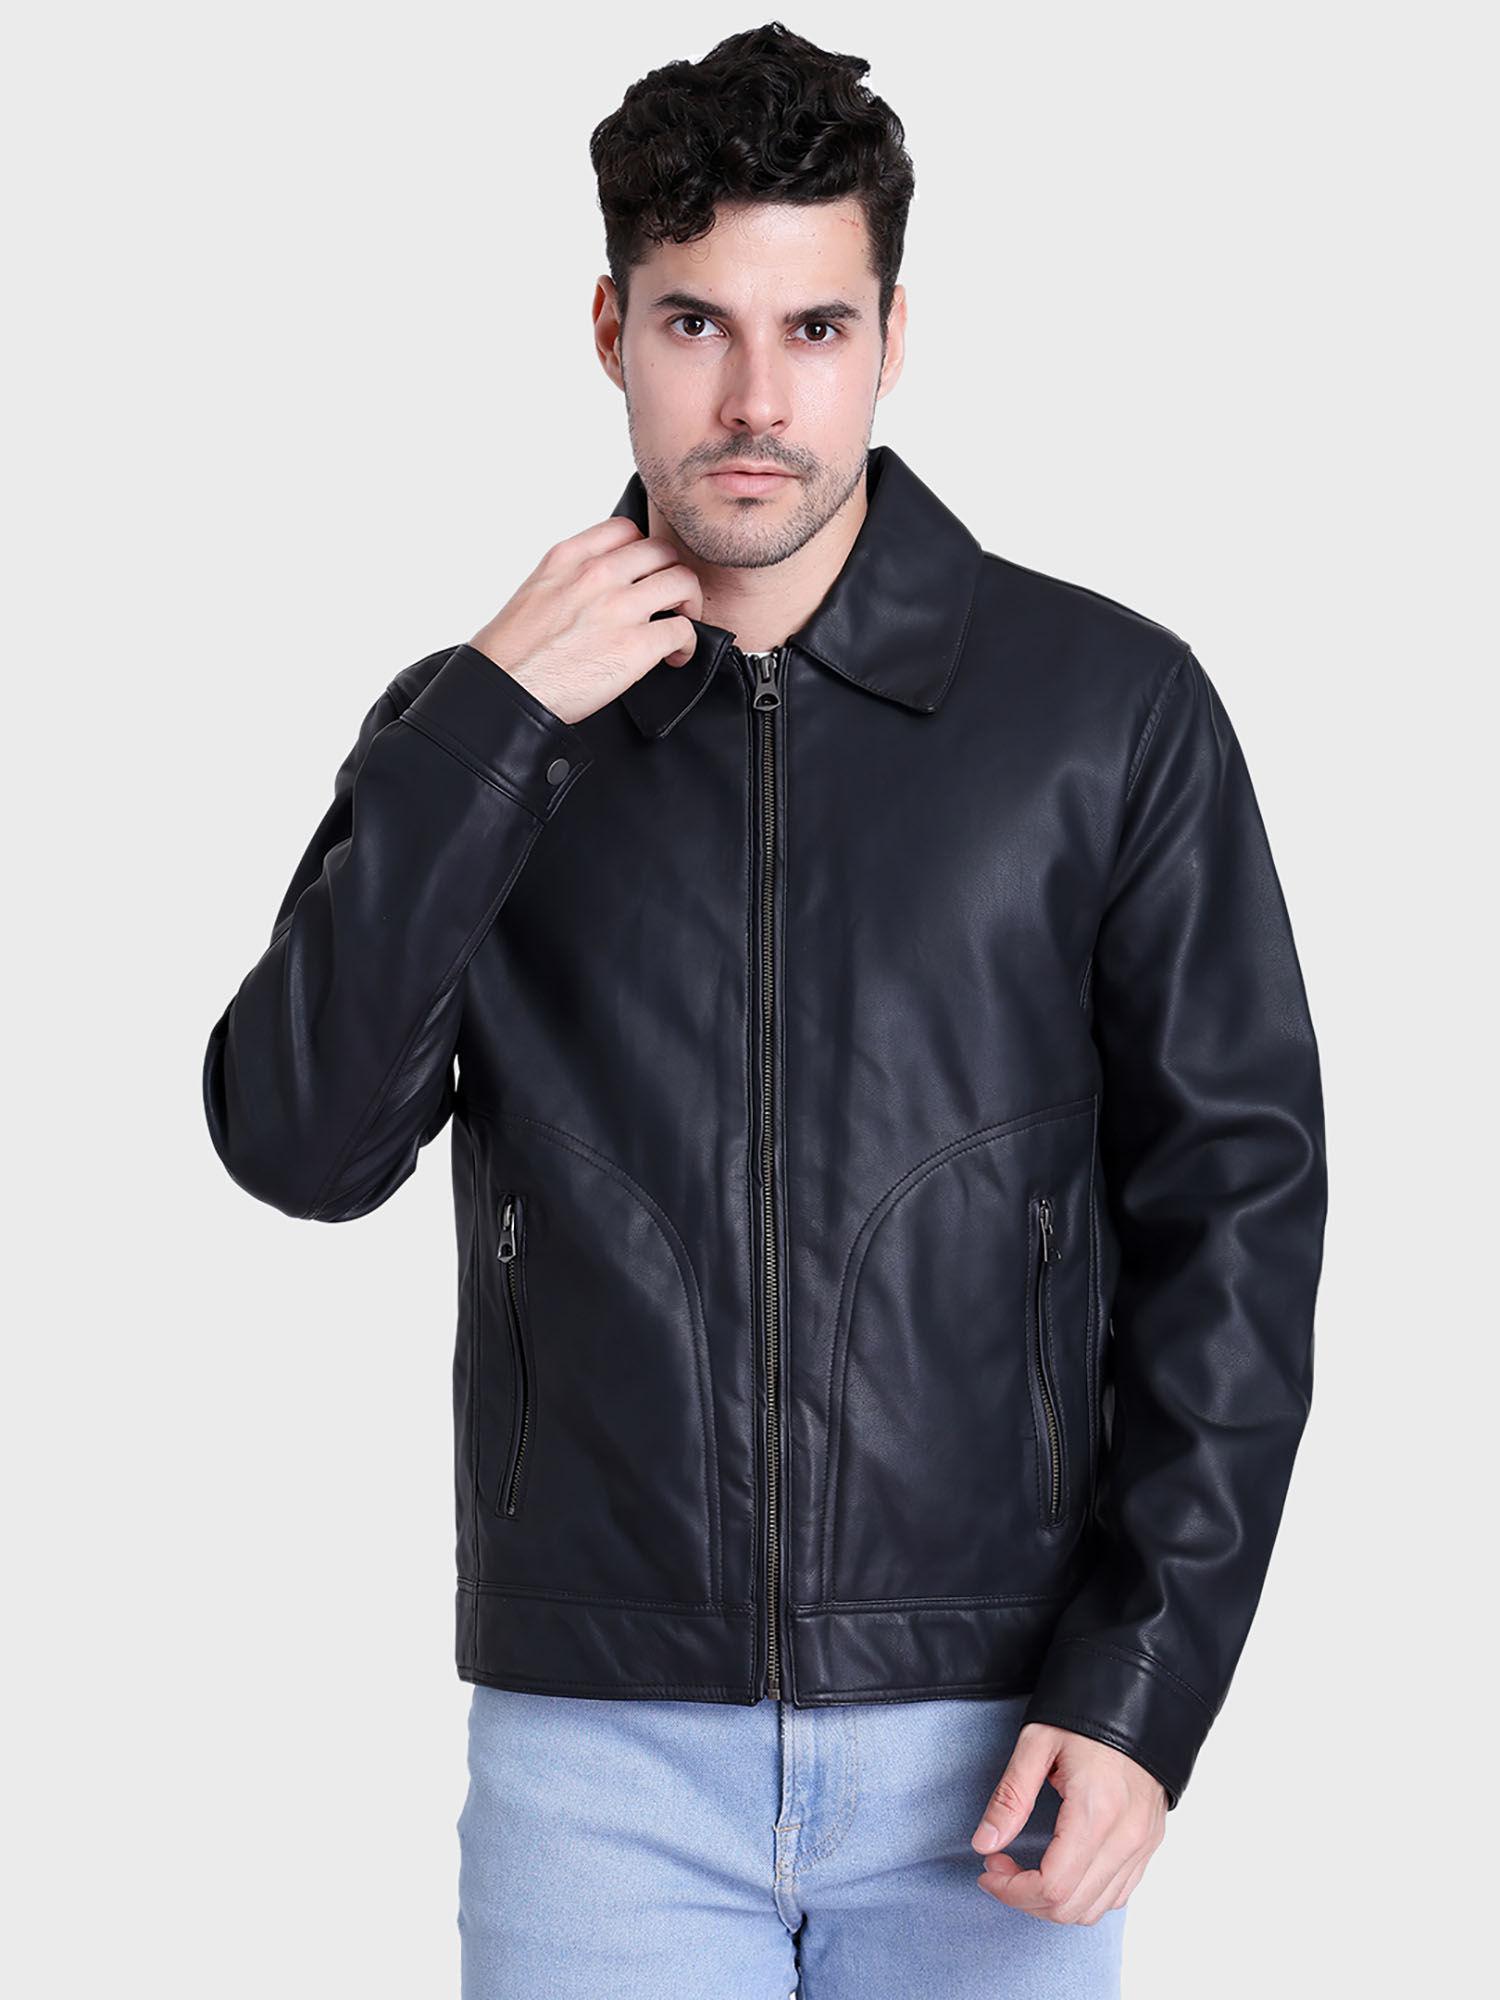 shirt collar leather jacket